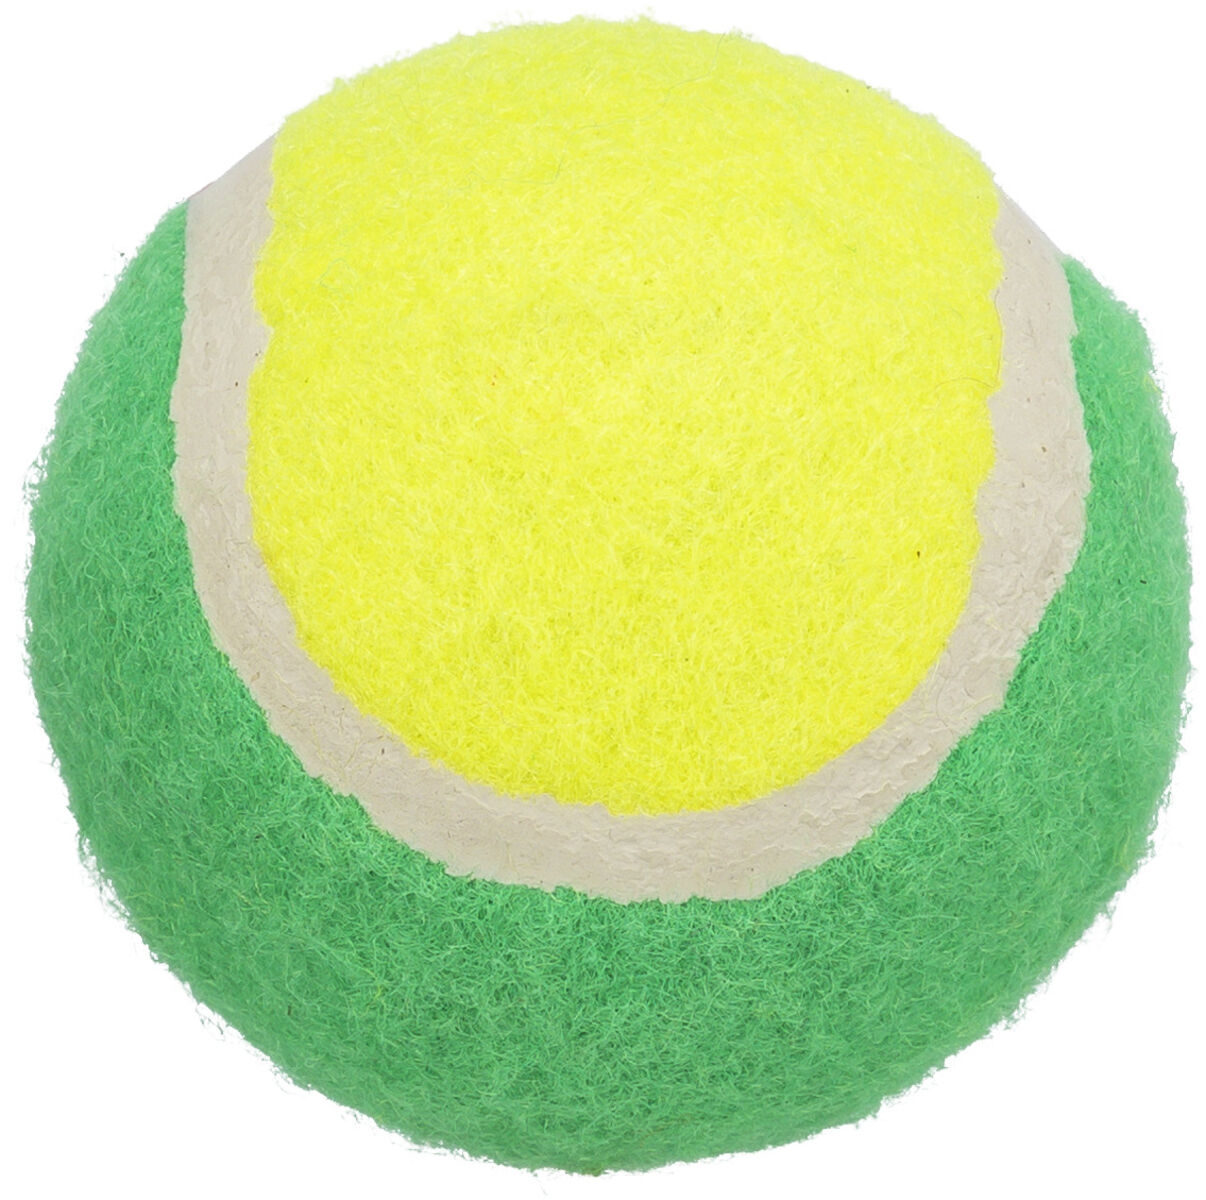 Hundelegetøj Tennisbold. Ø10cm.